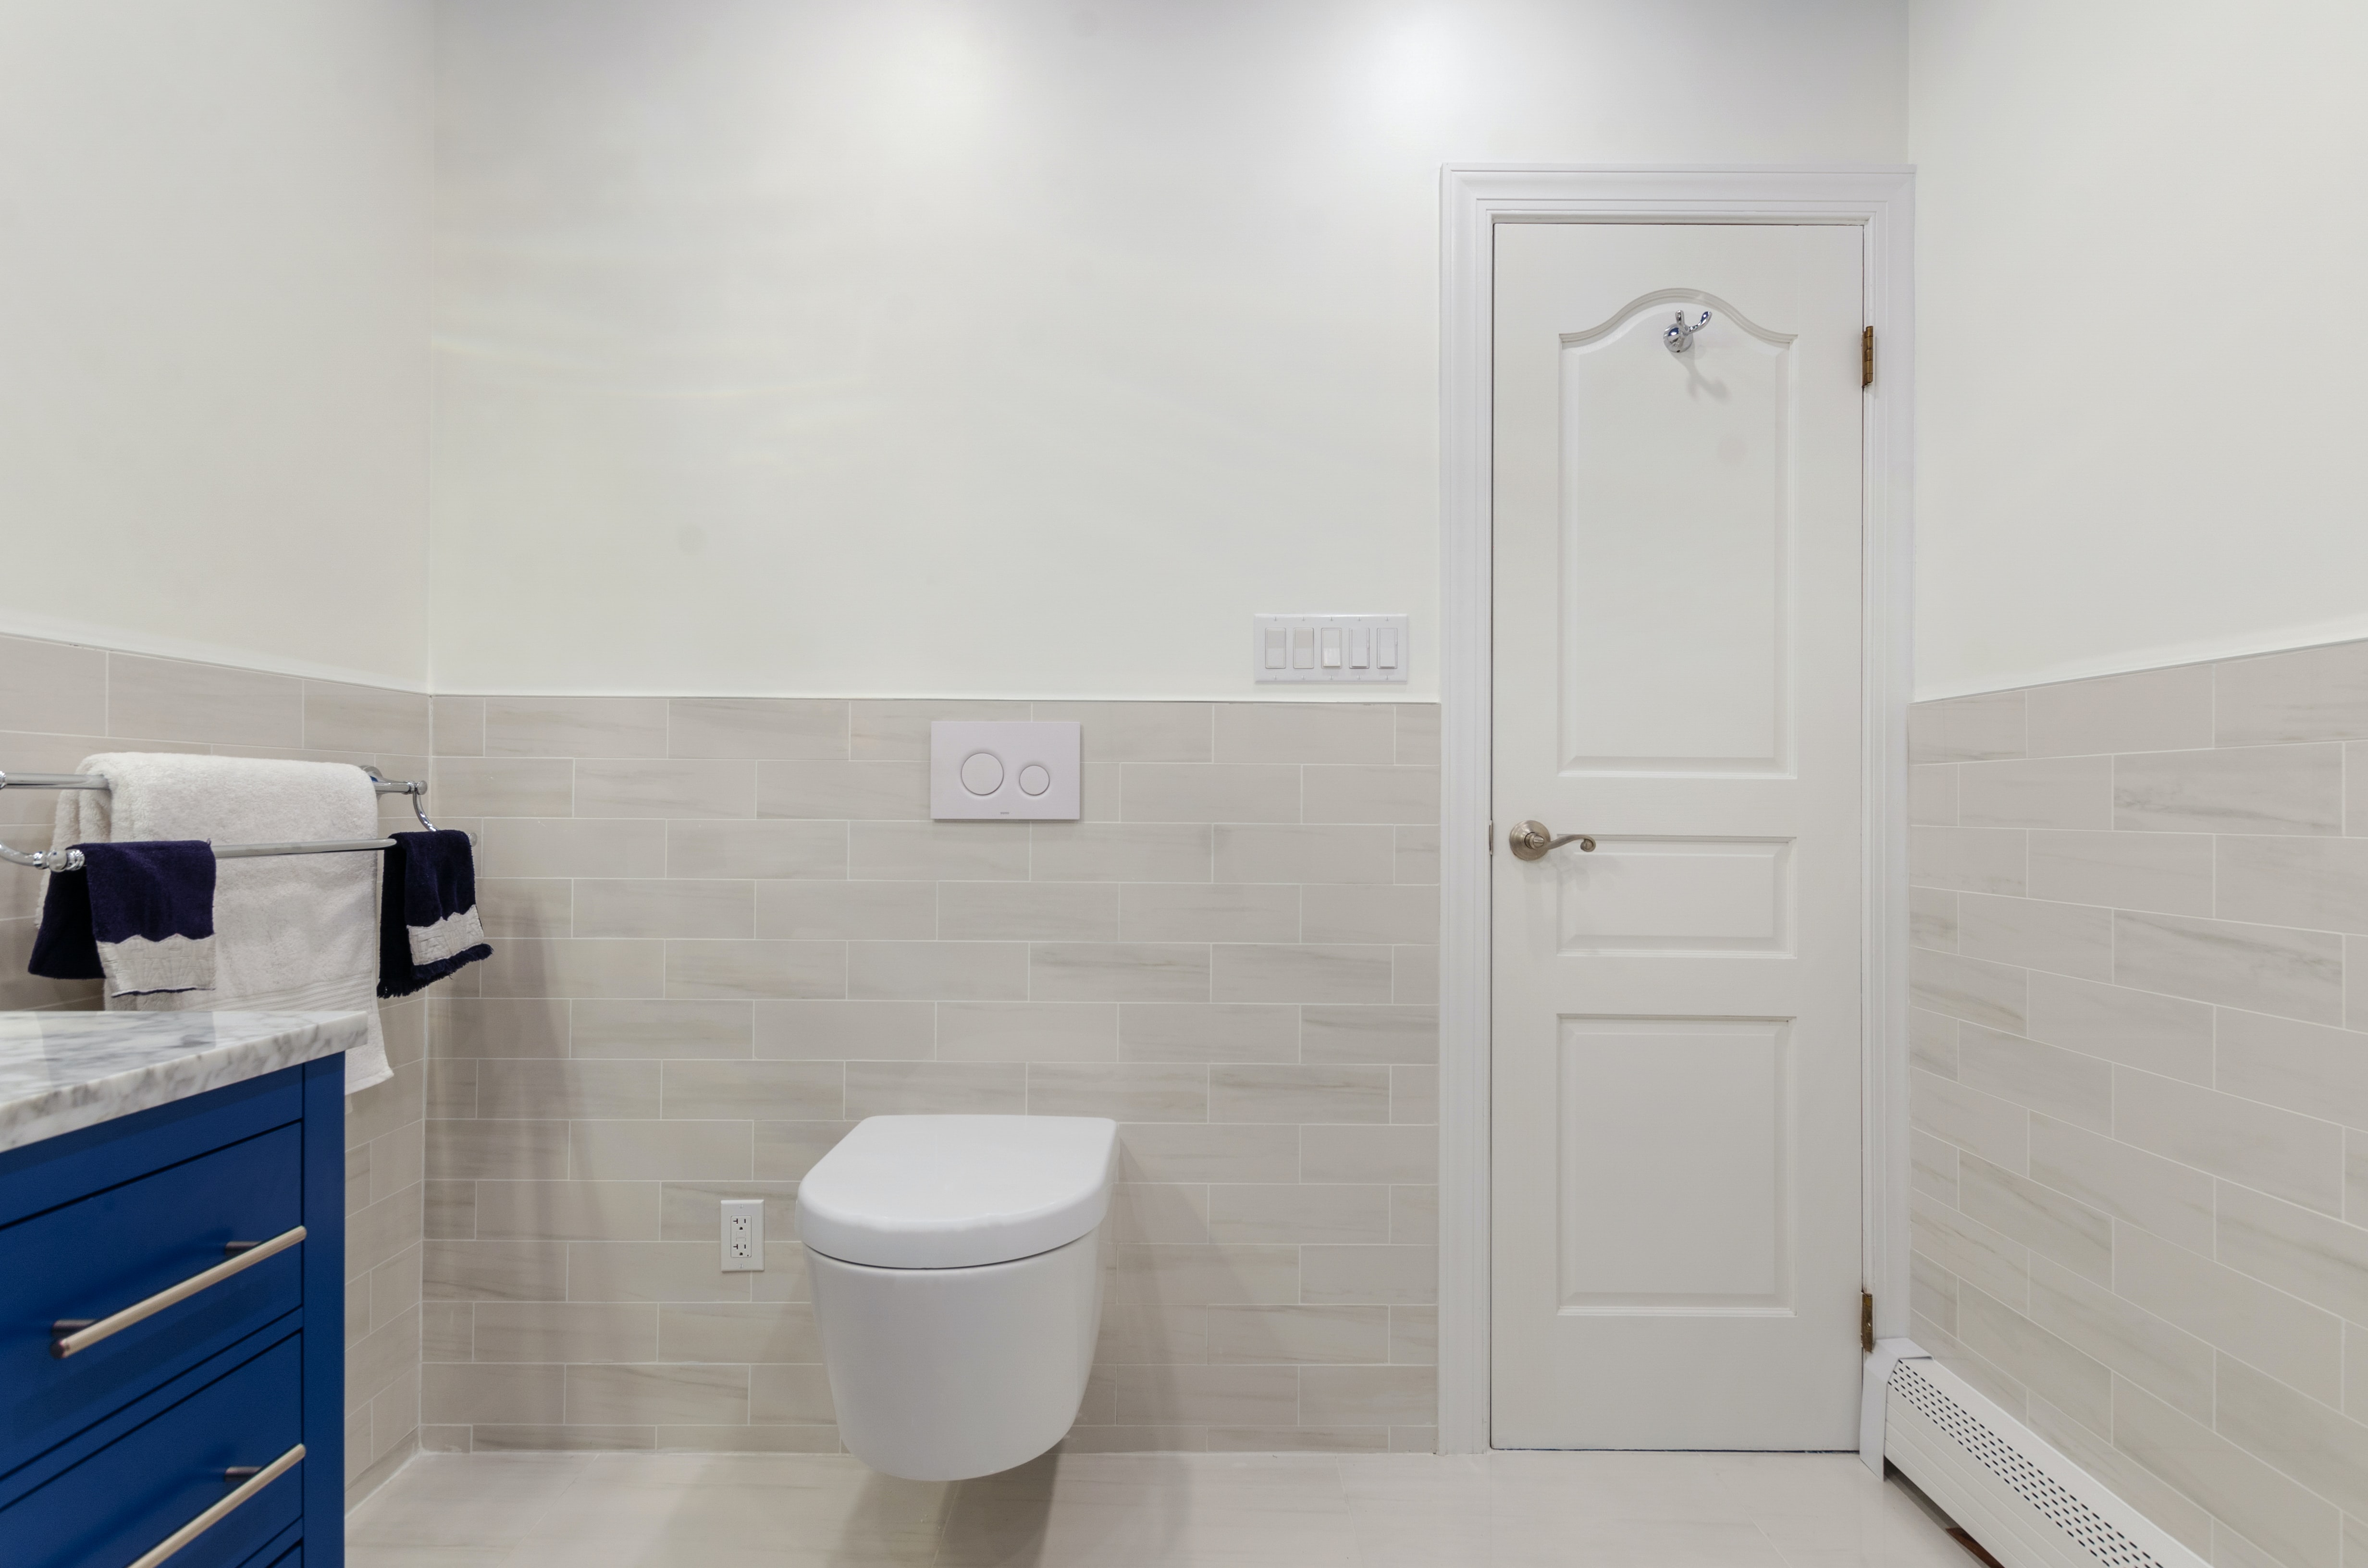 10 Minimalist Bathroom Ideas That Promote Tranquility 